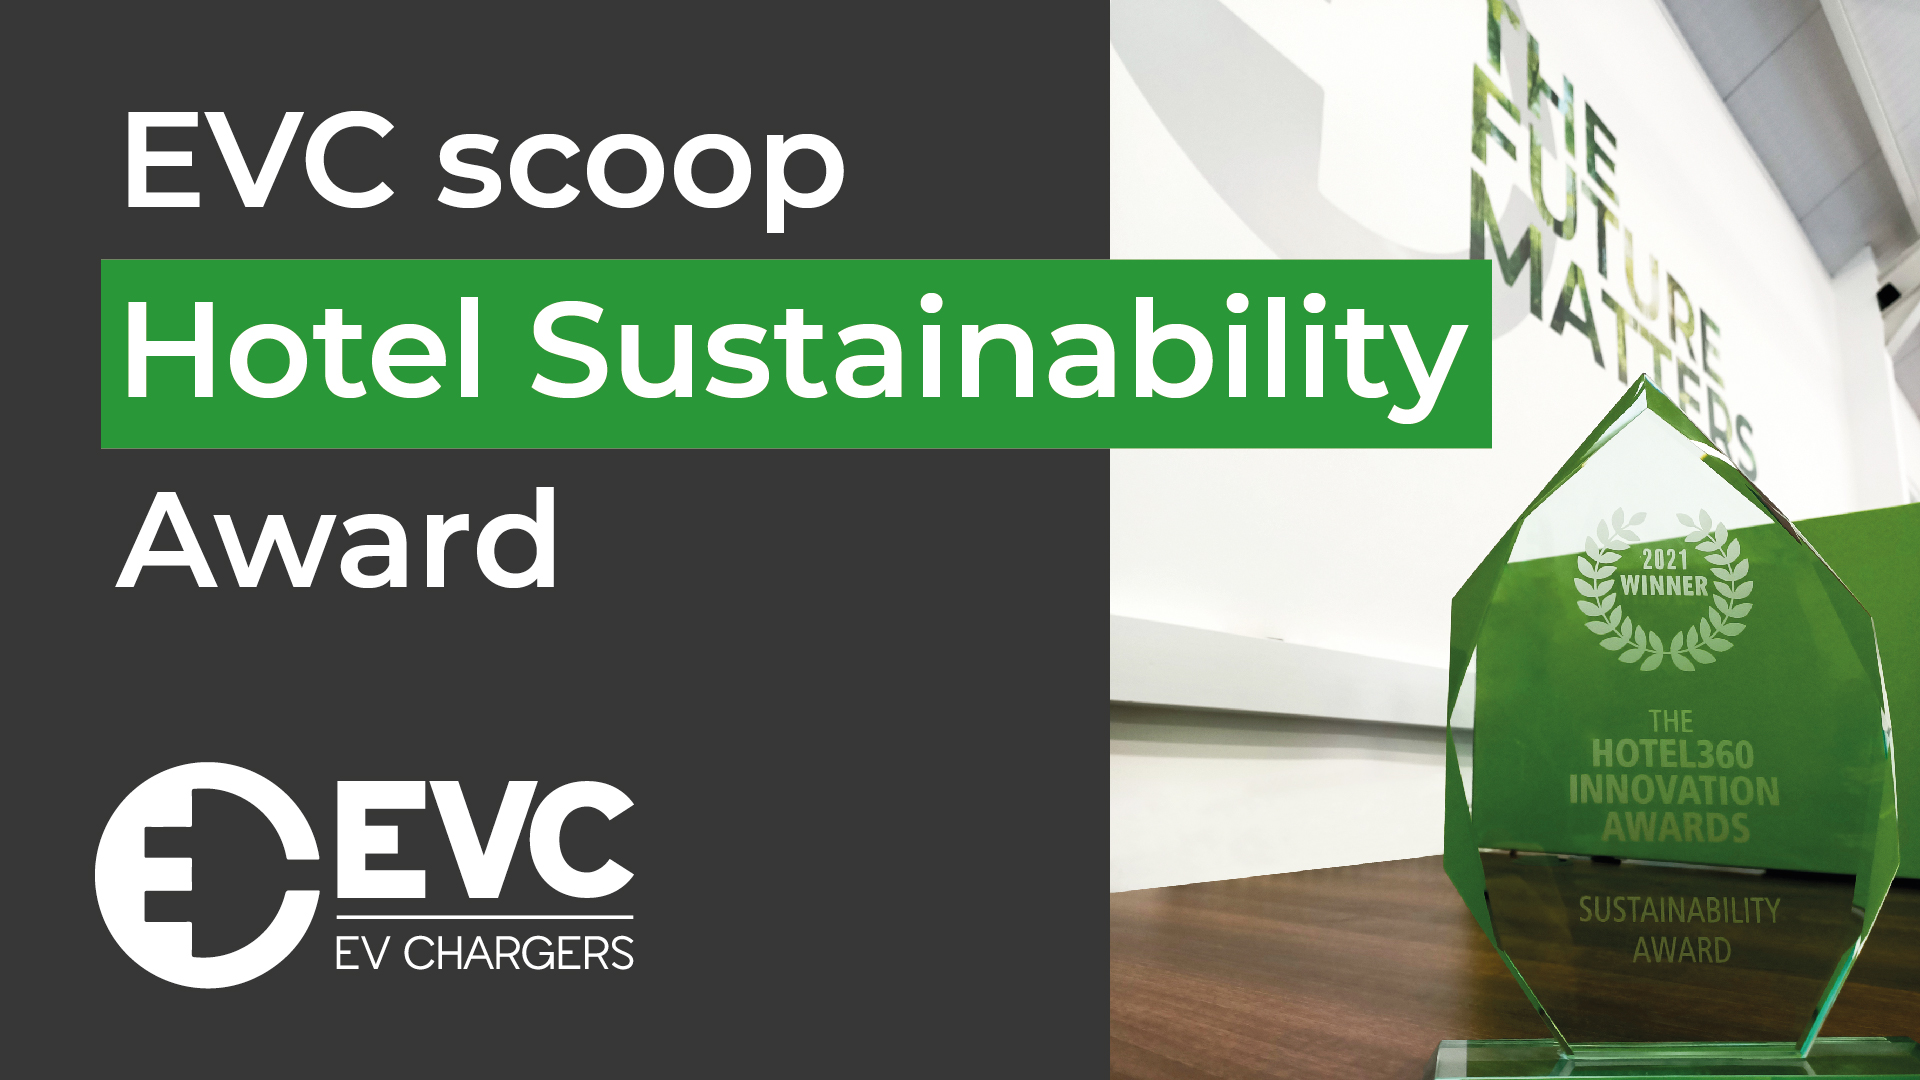 EVC scoop Hotel Sustainability Award